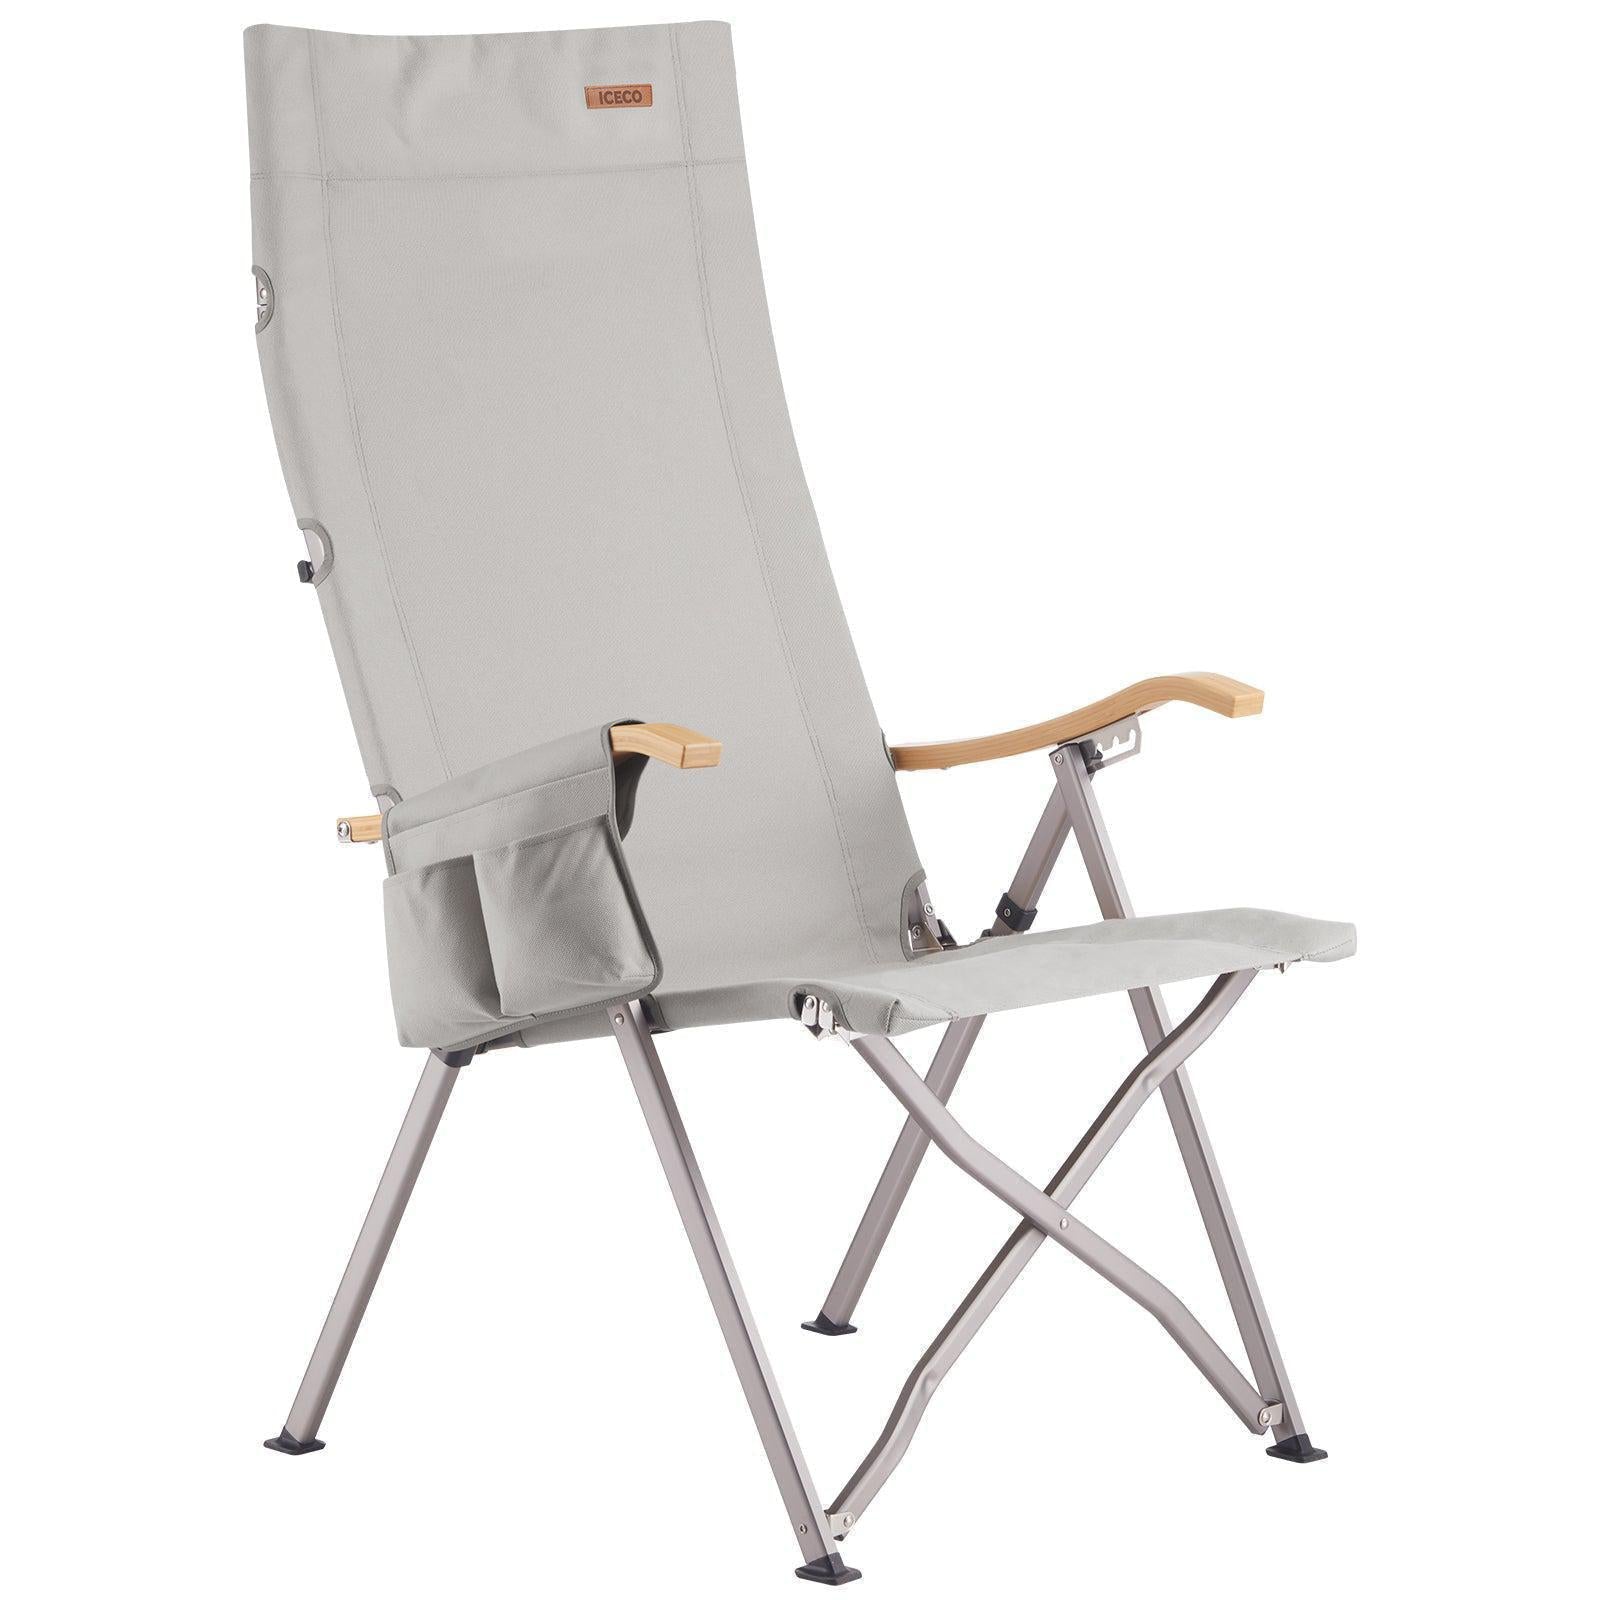 ICECO Hi1600 High Back Camping Chair Cushion, Folding Chair Cushions,  Lounge Chair Pad – ICECOFREEZER